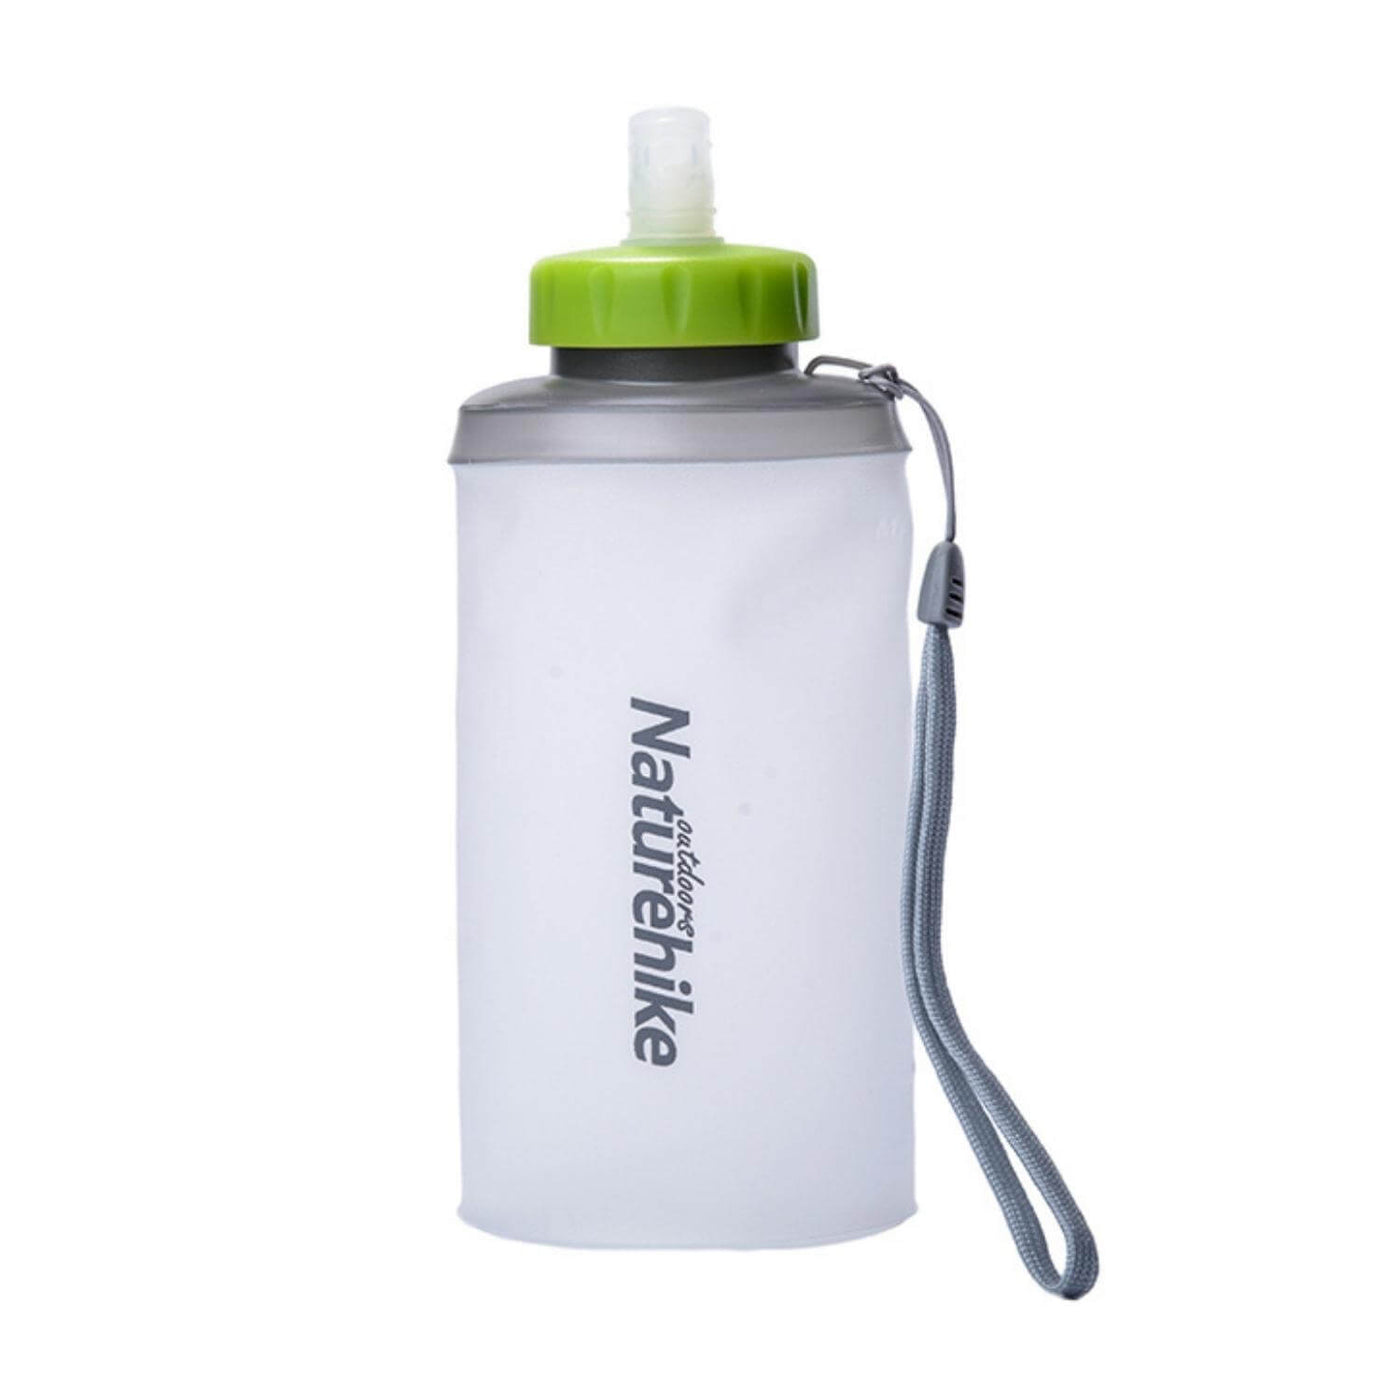 TUP Antibacterial Soft Water Bottle